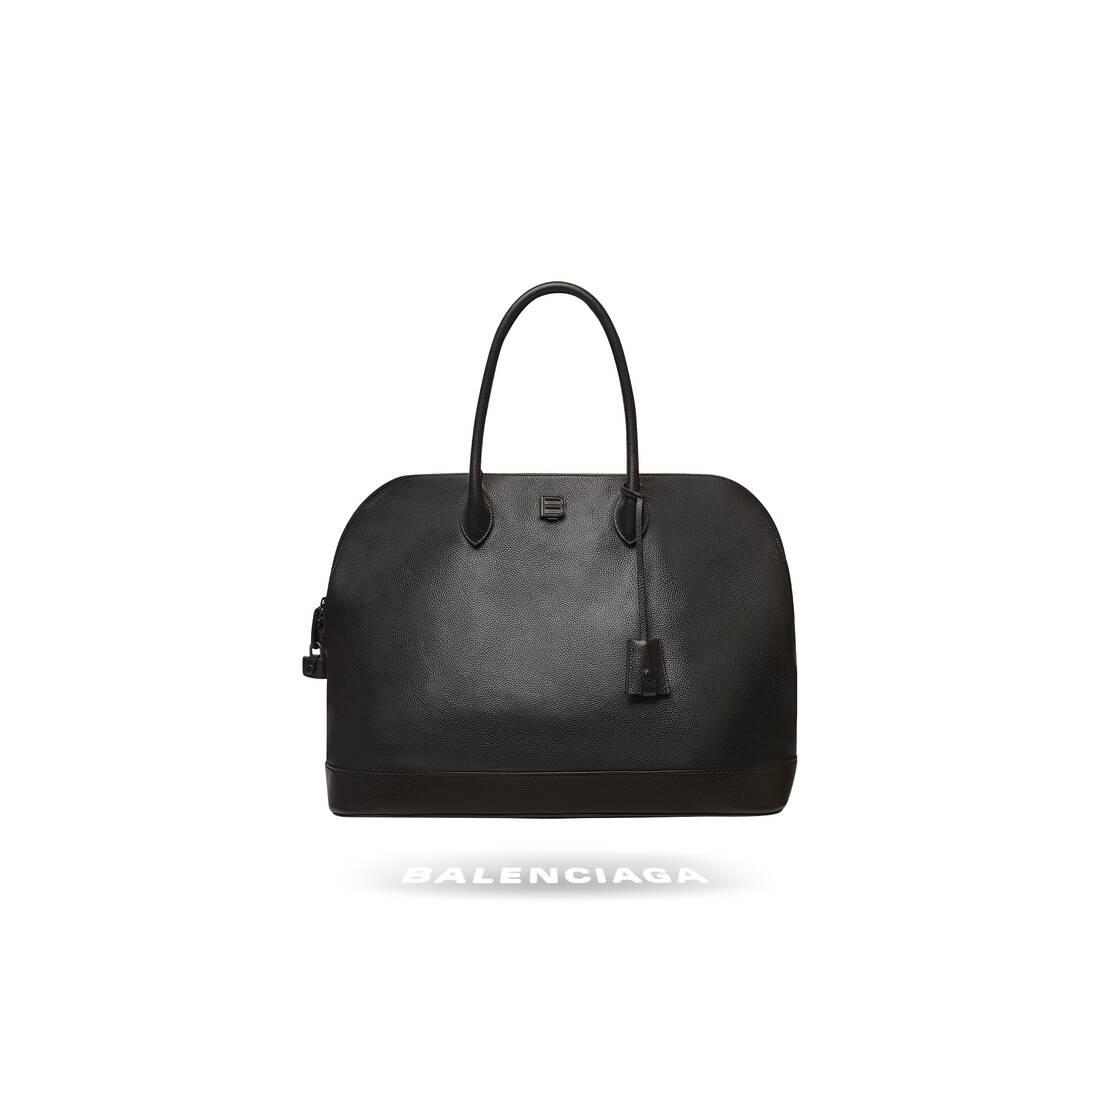 Balenciaga Projector Large Handbag in Black | Lyst